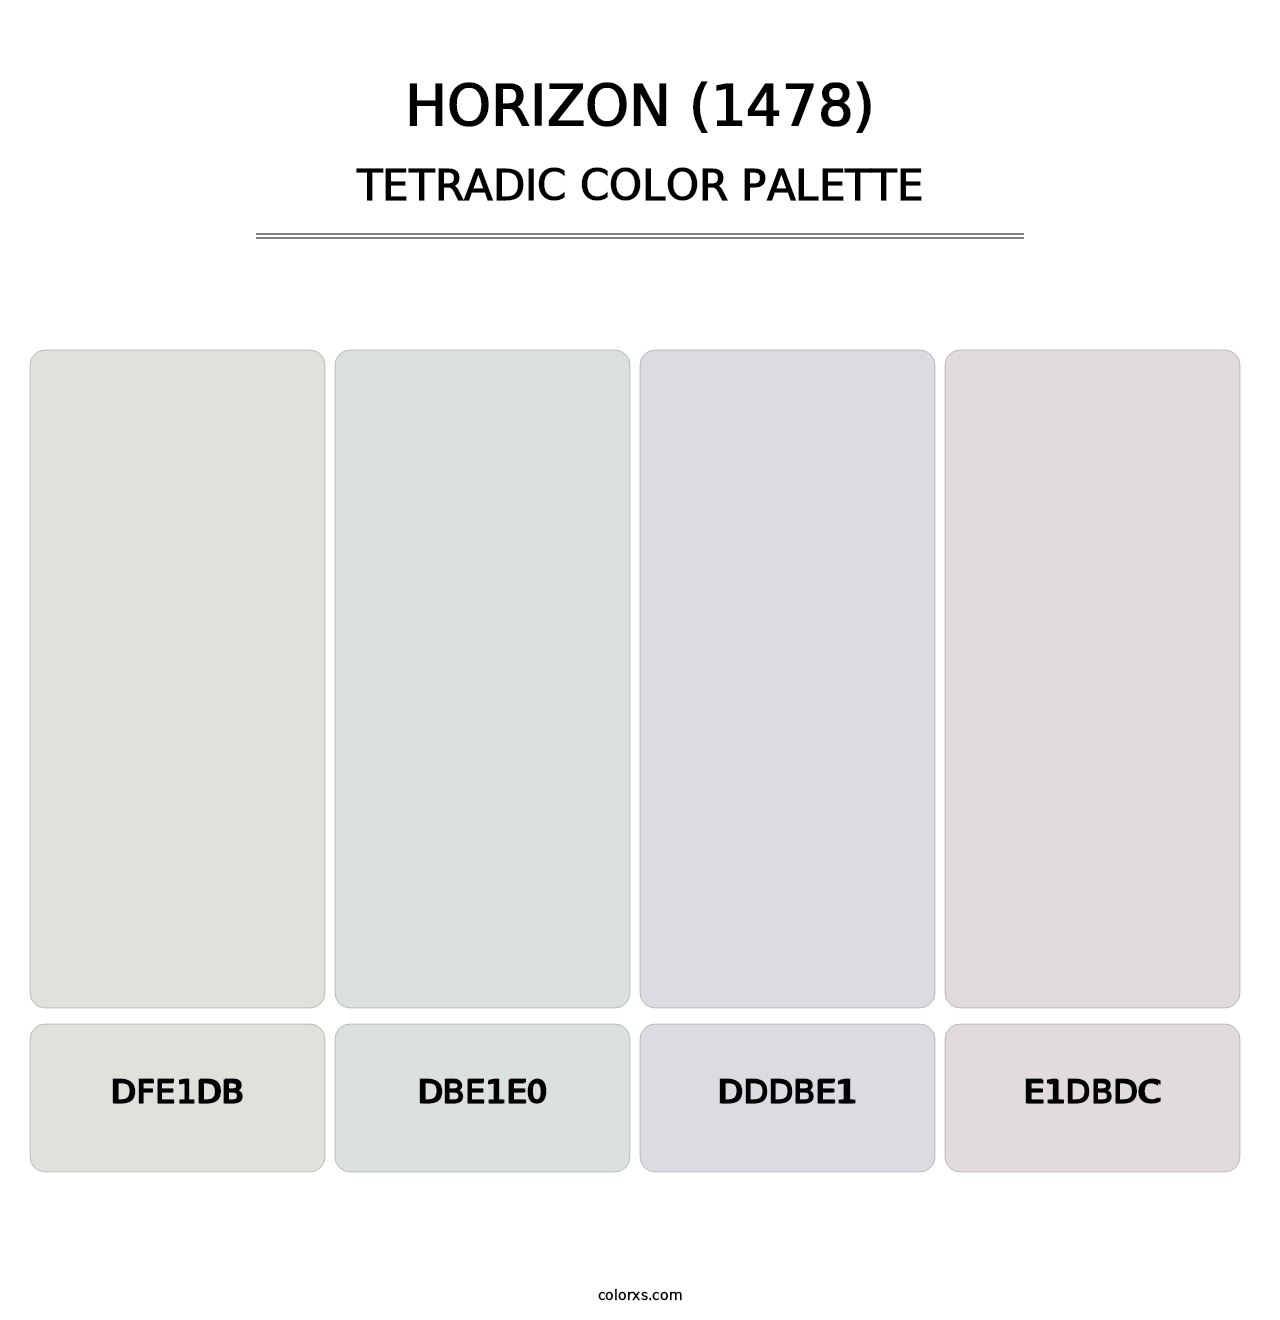 Horizon (1478) - Tetradic Color Palette